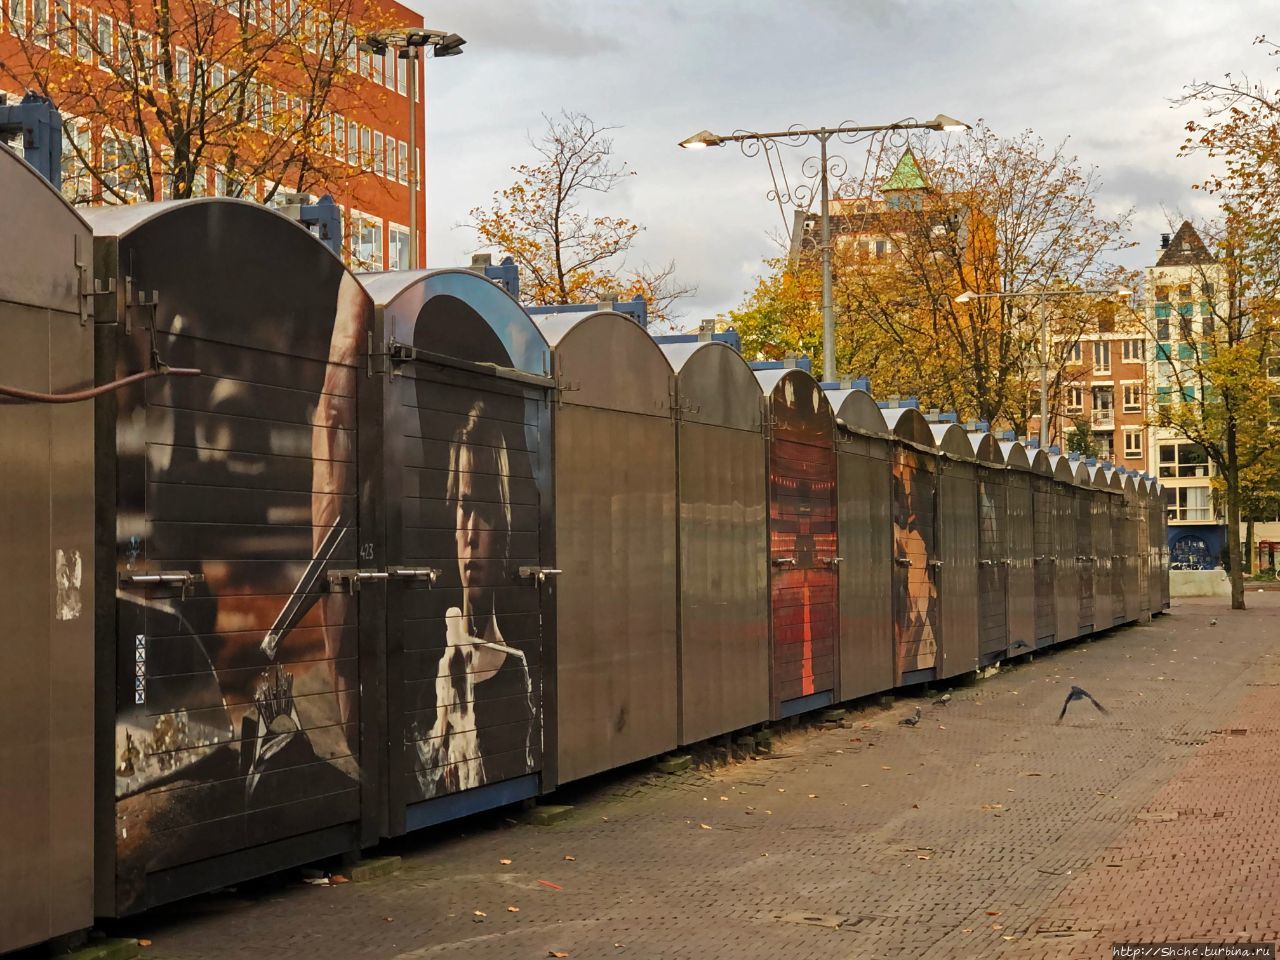 Блошиный рынок Вателооплейн Амстердам, Нидерланды